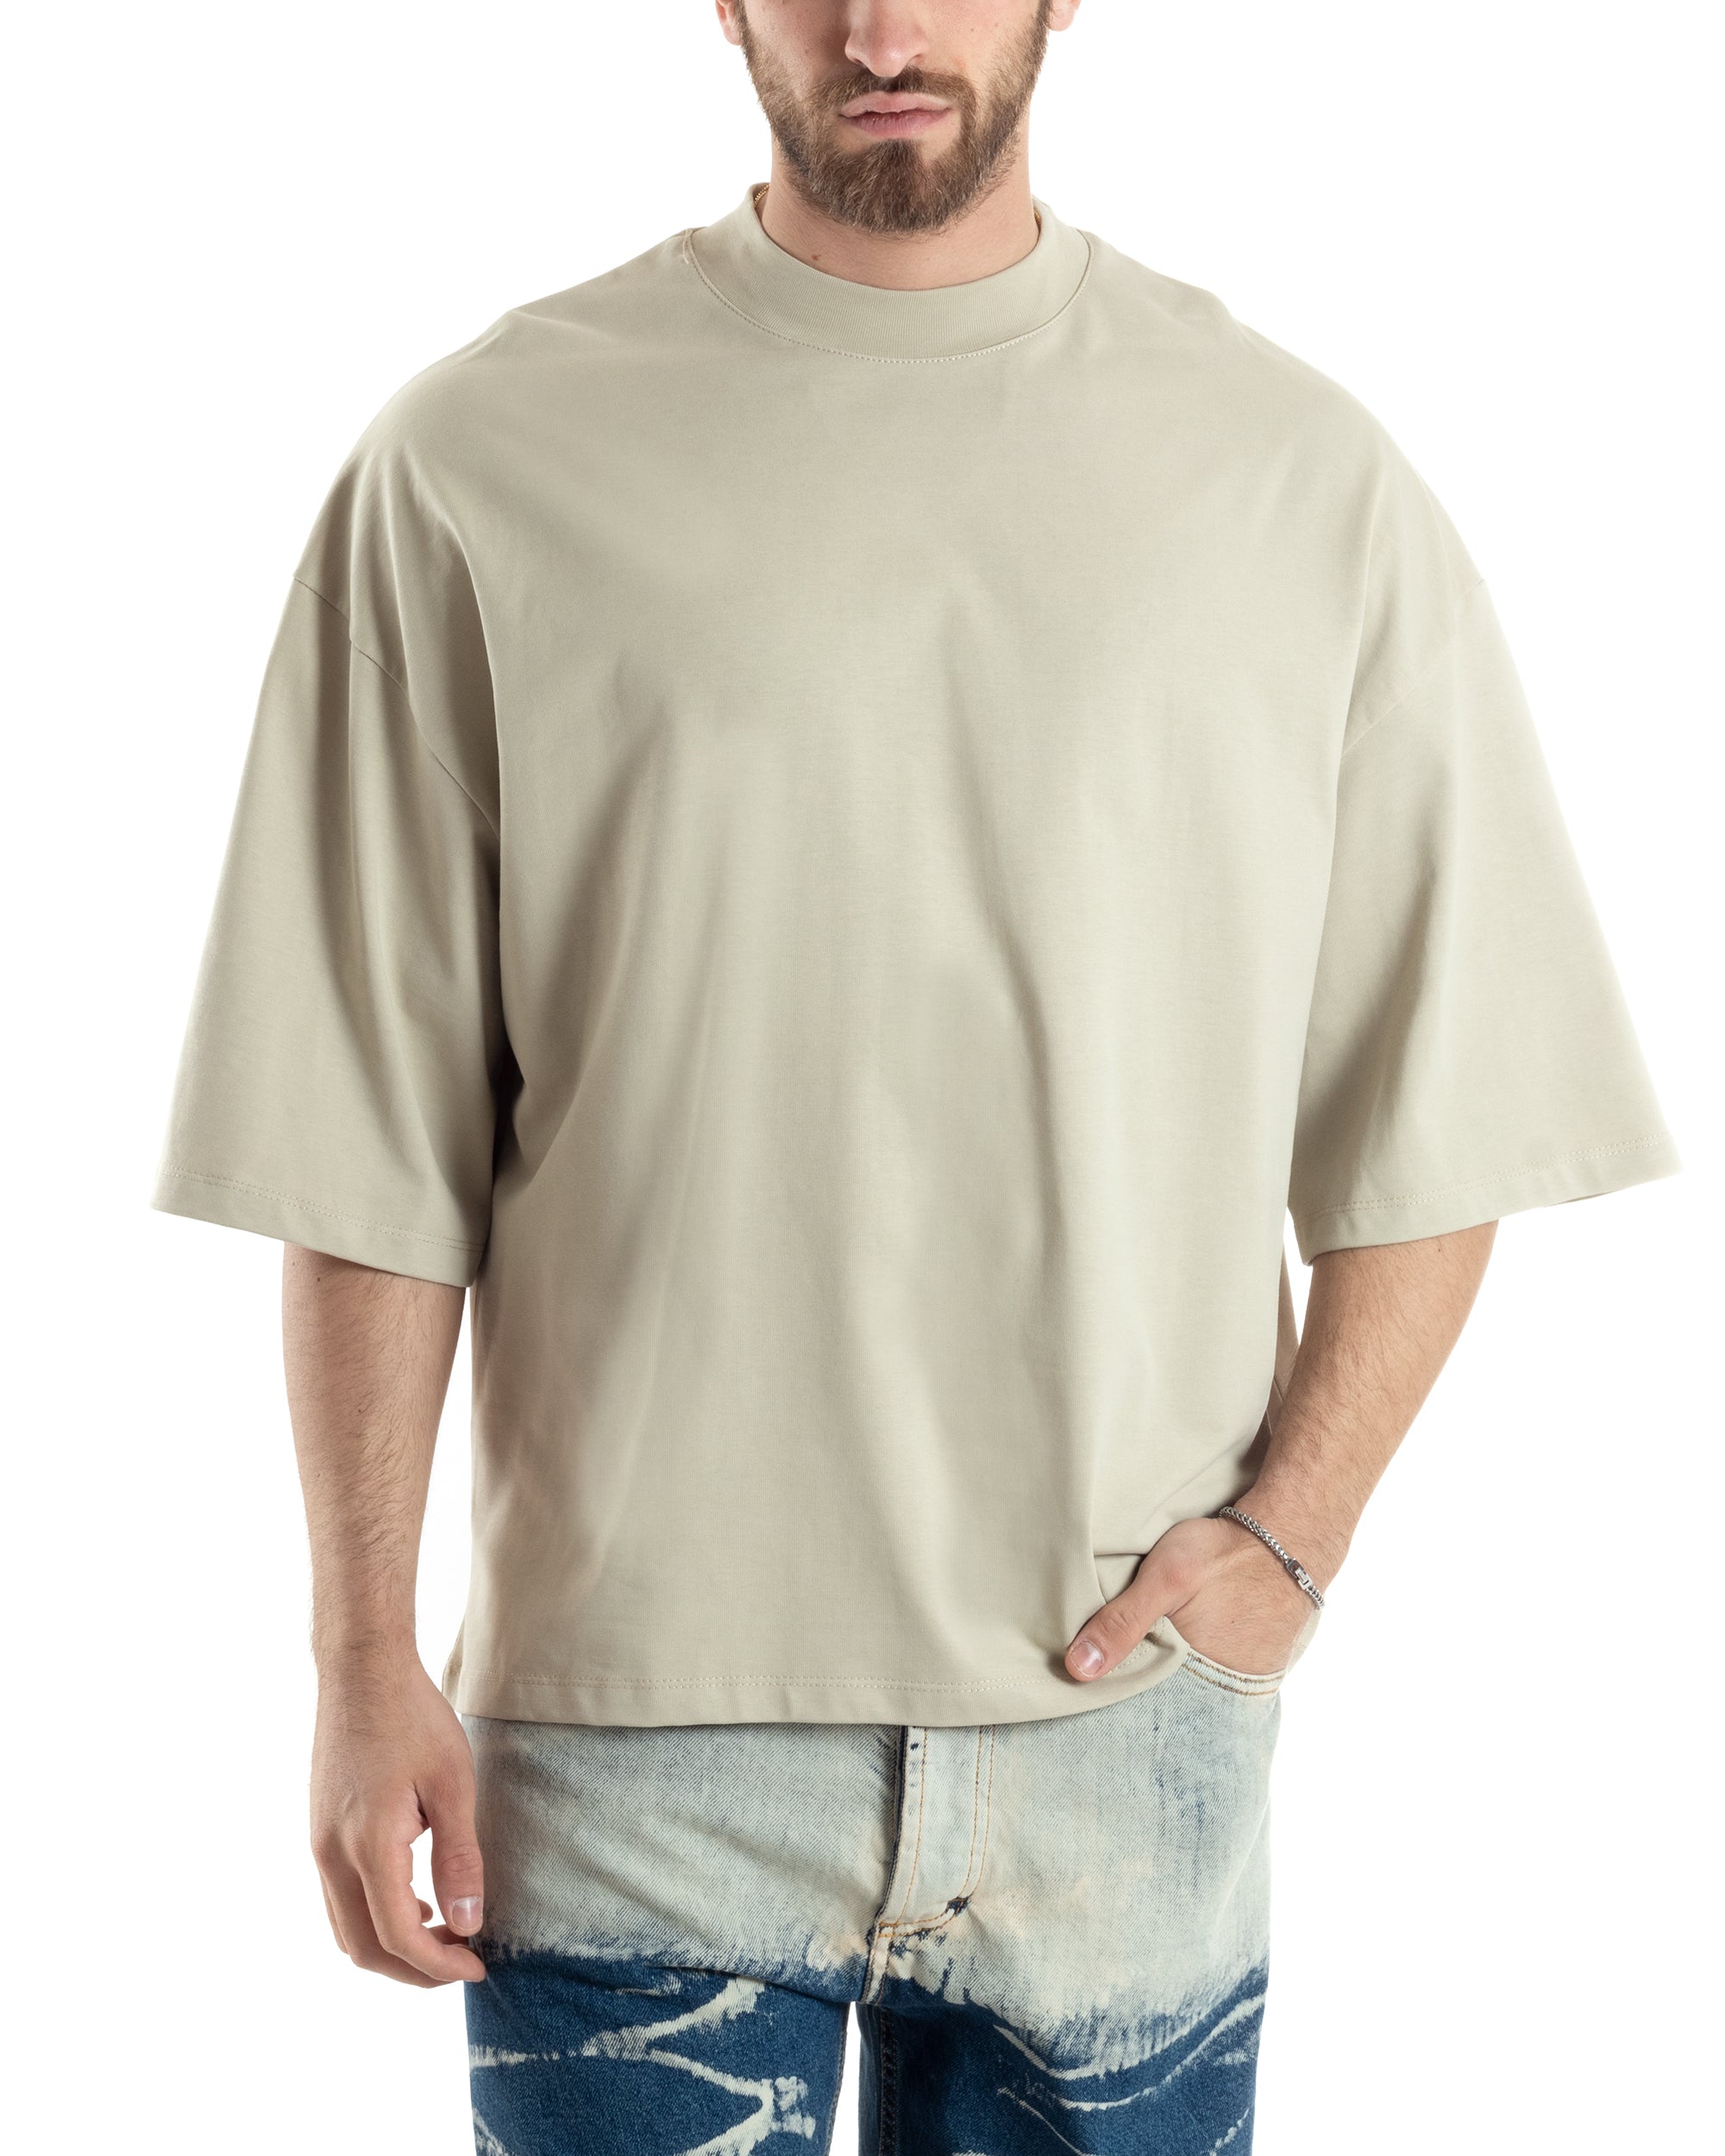 T-shirt Uomo Girocollo Boxy Fit Oversize Cotone Spalla Scesa Gola Alta Casual Basic Beige GIOSAL-TS3022A